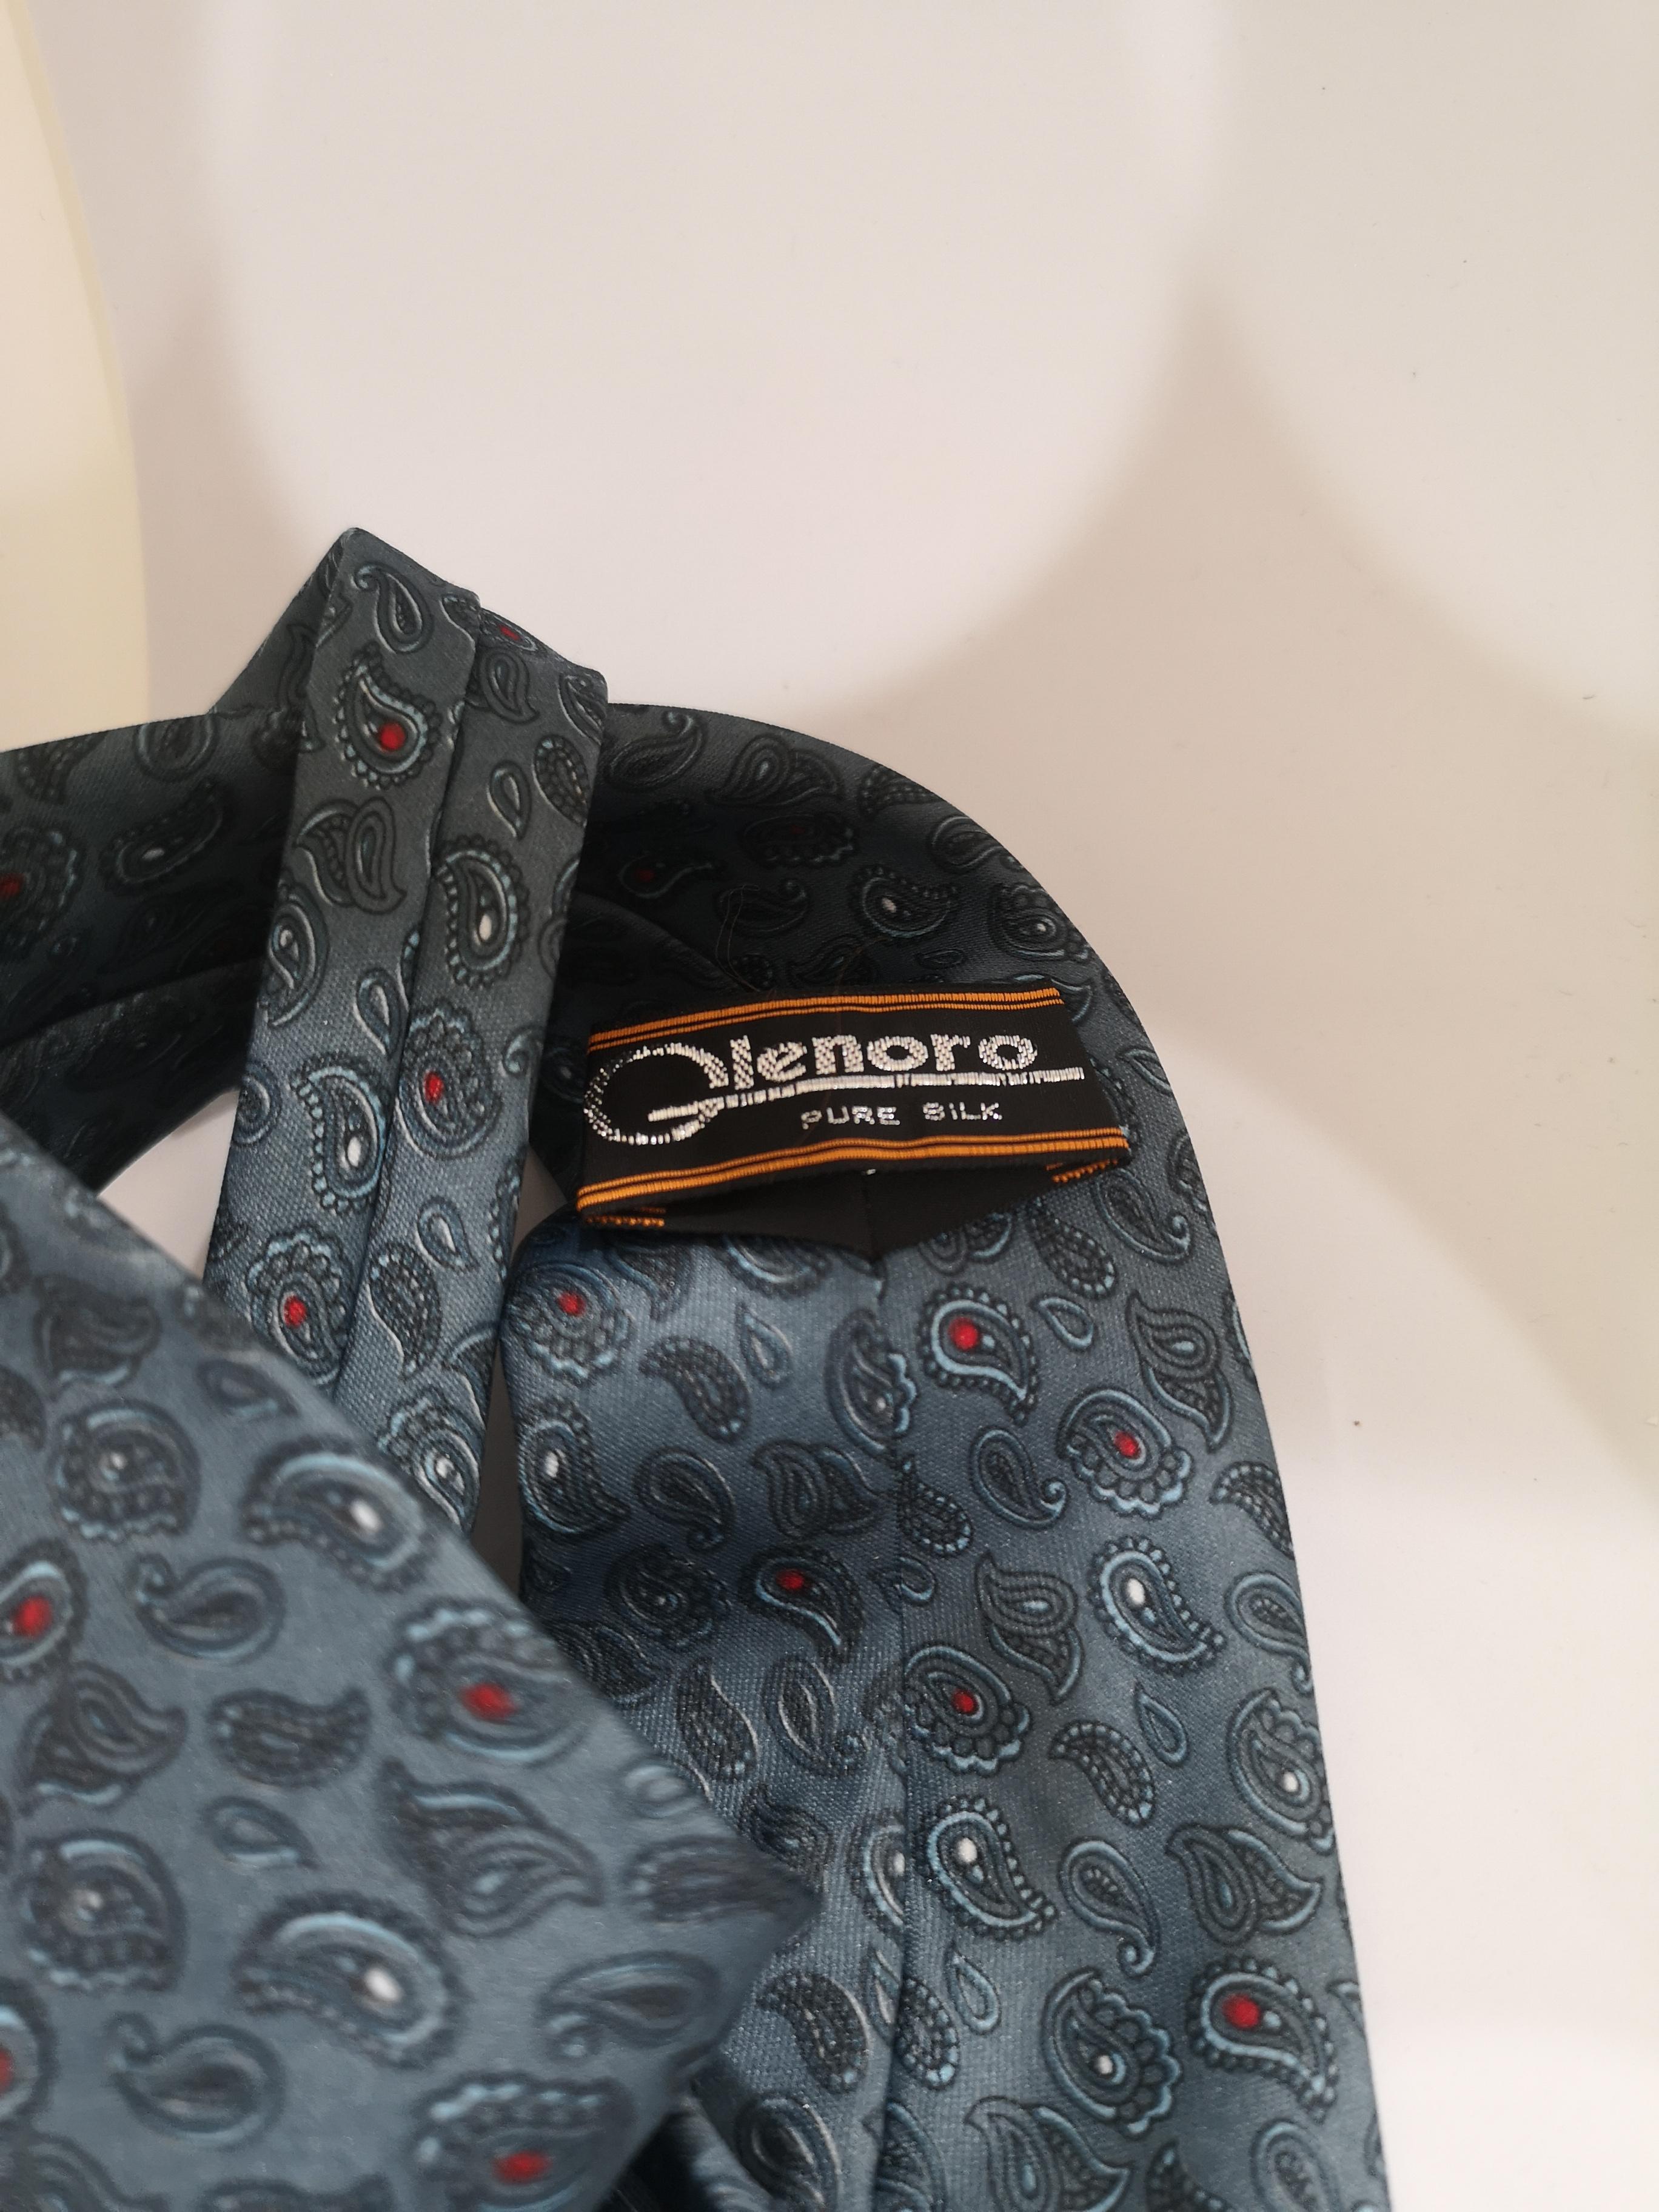 Cleonoro grey silk tie 2